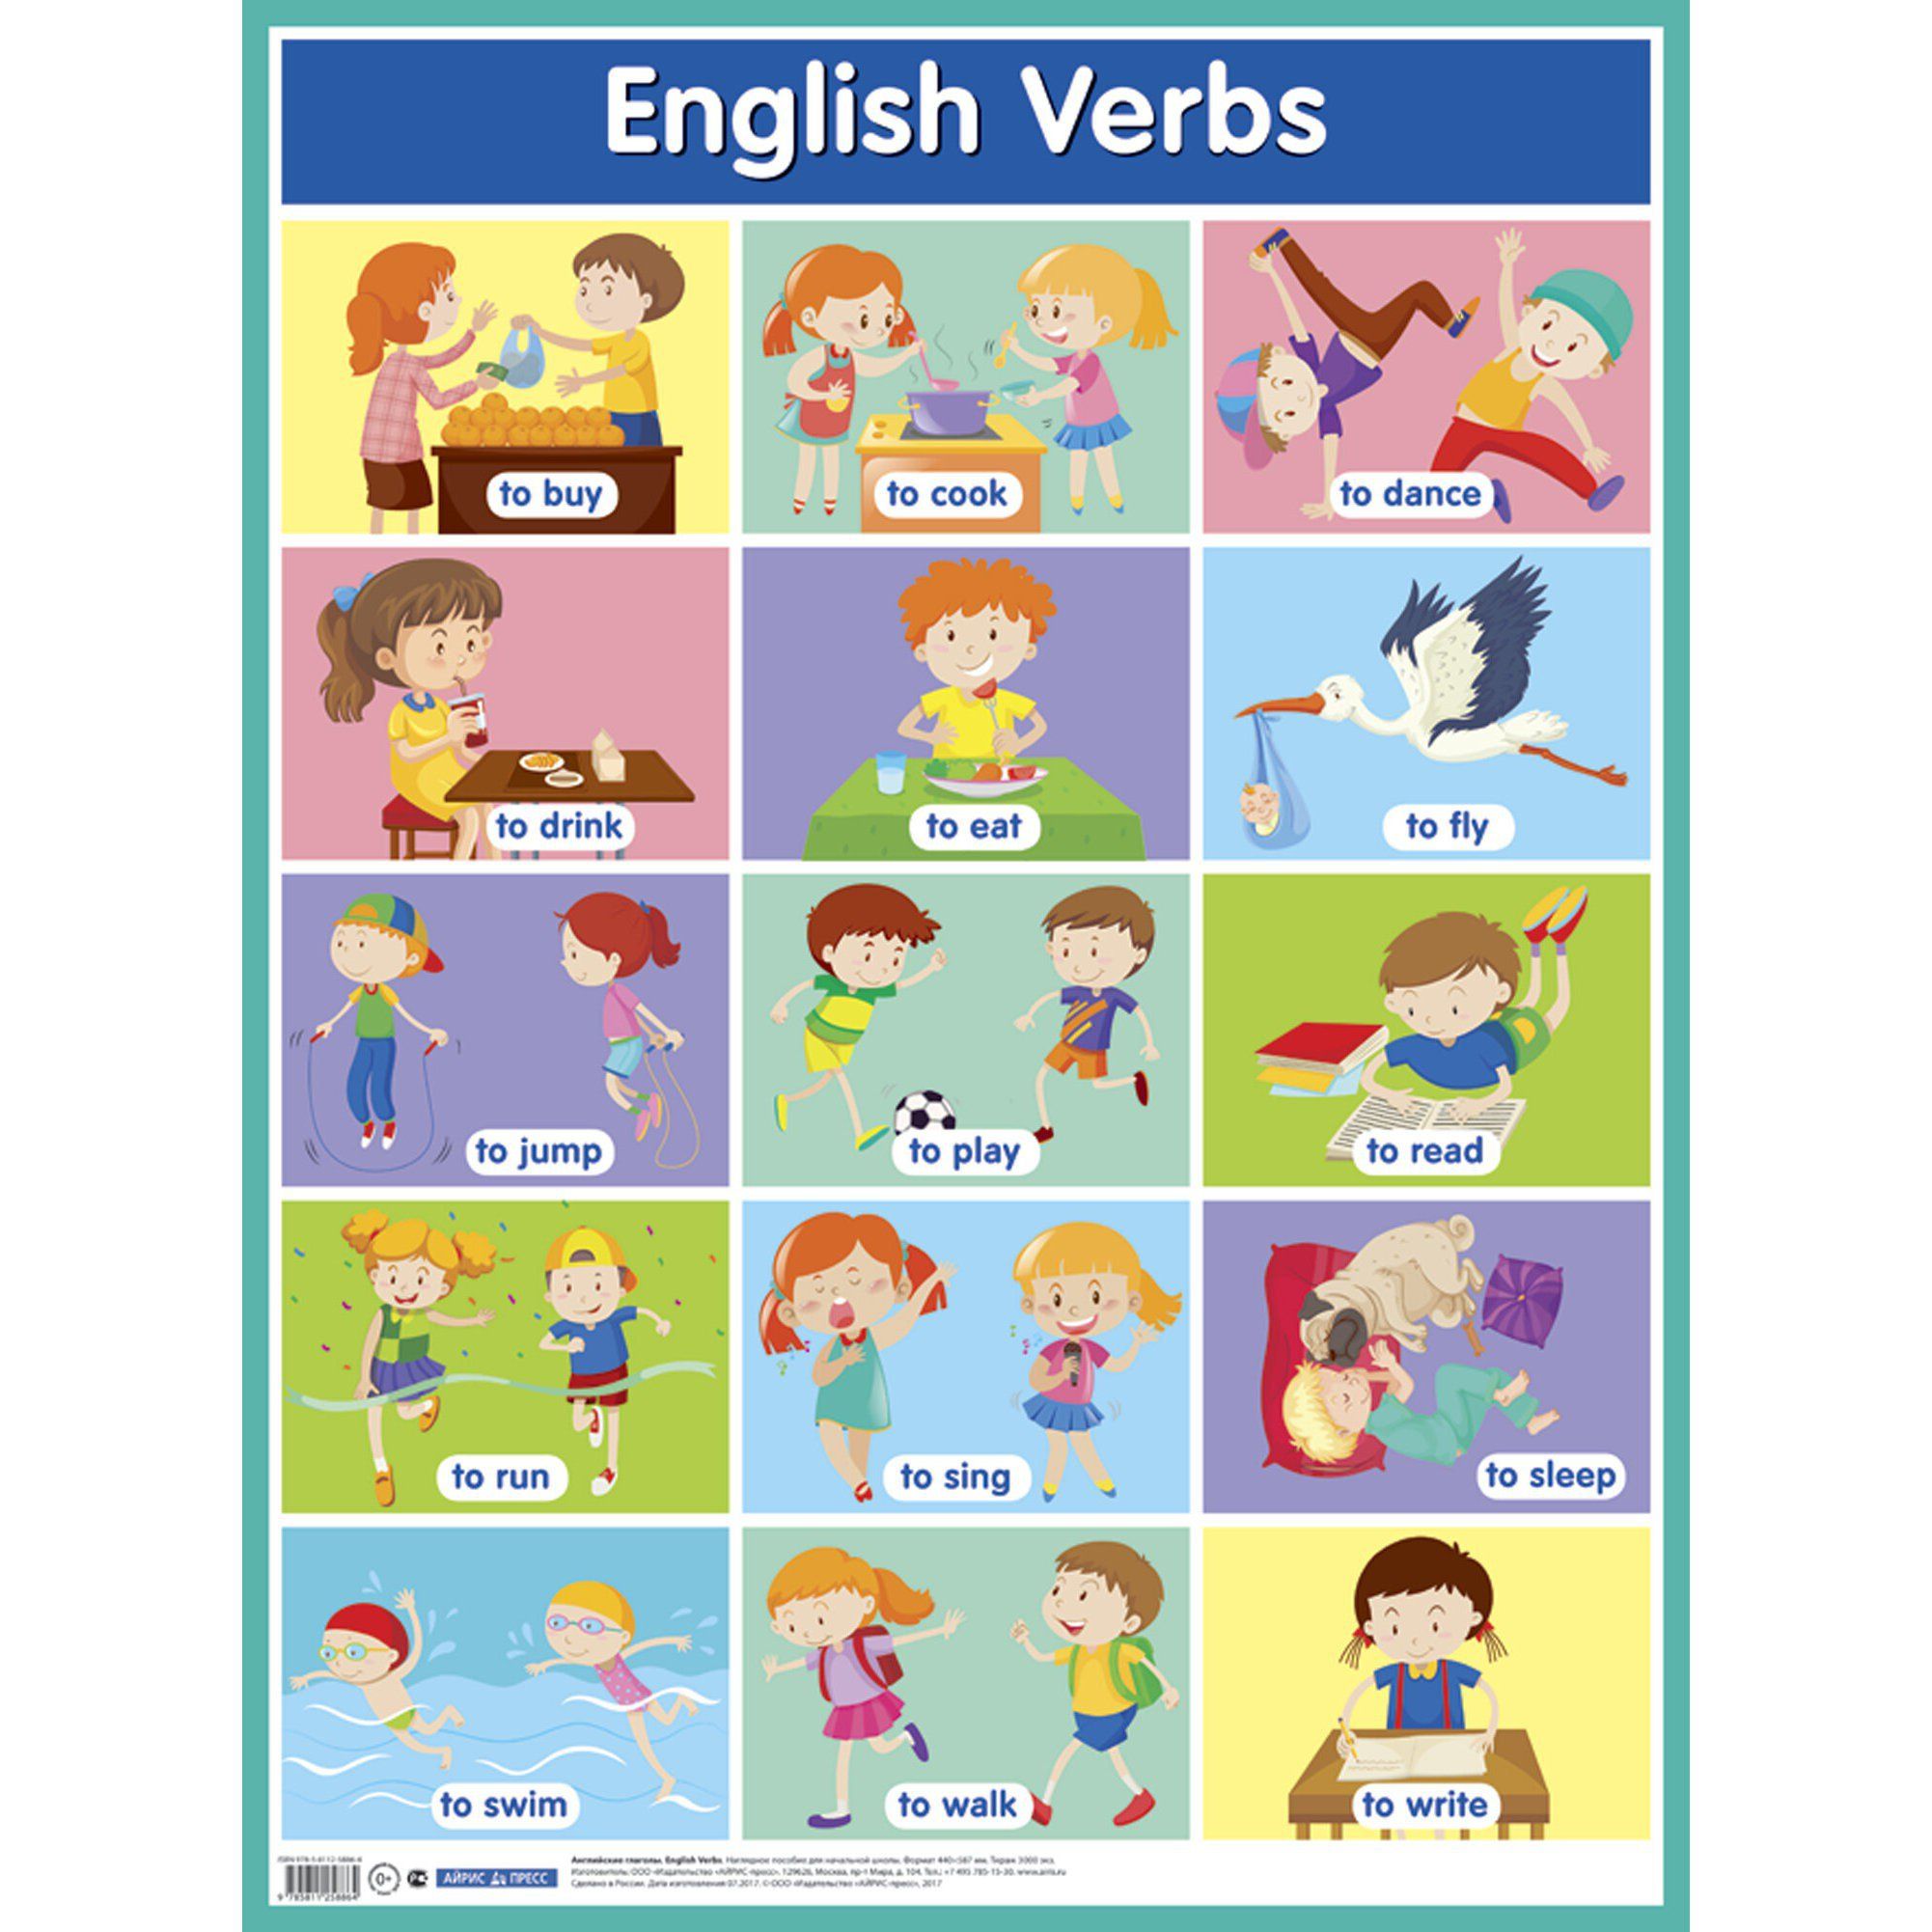 Глаголы английского аудио. Глаголы на английском для детей. Глаголы в английском языке для детей. Английские глаголы в картинках. Английские глаголы для дошкольников.